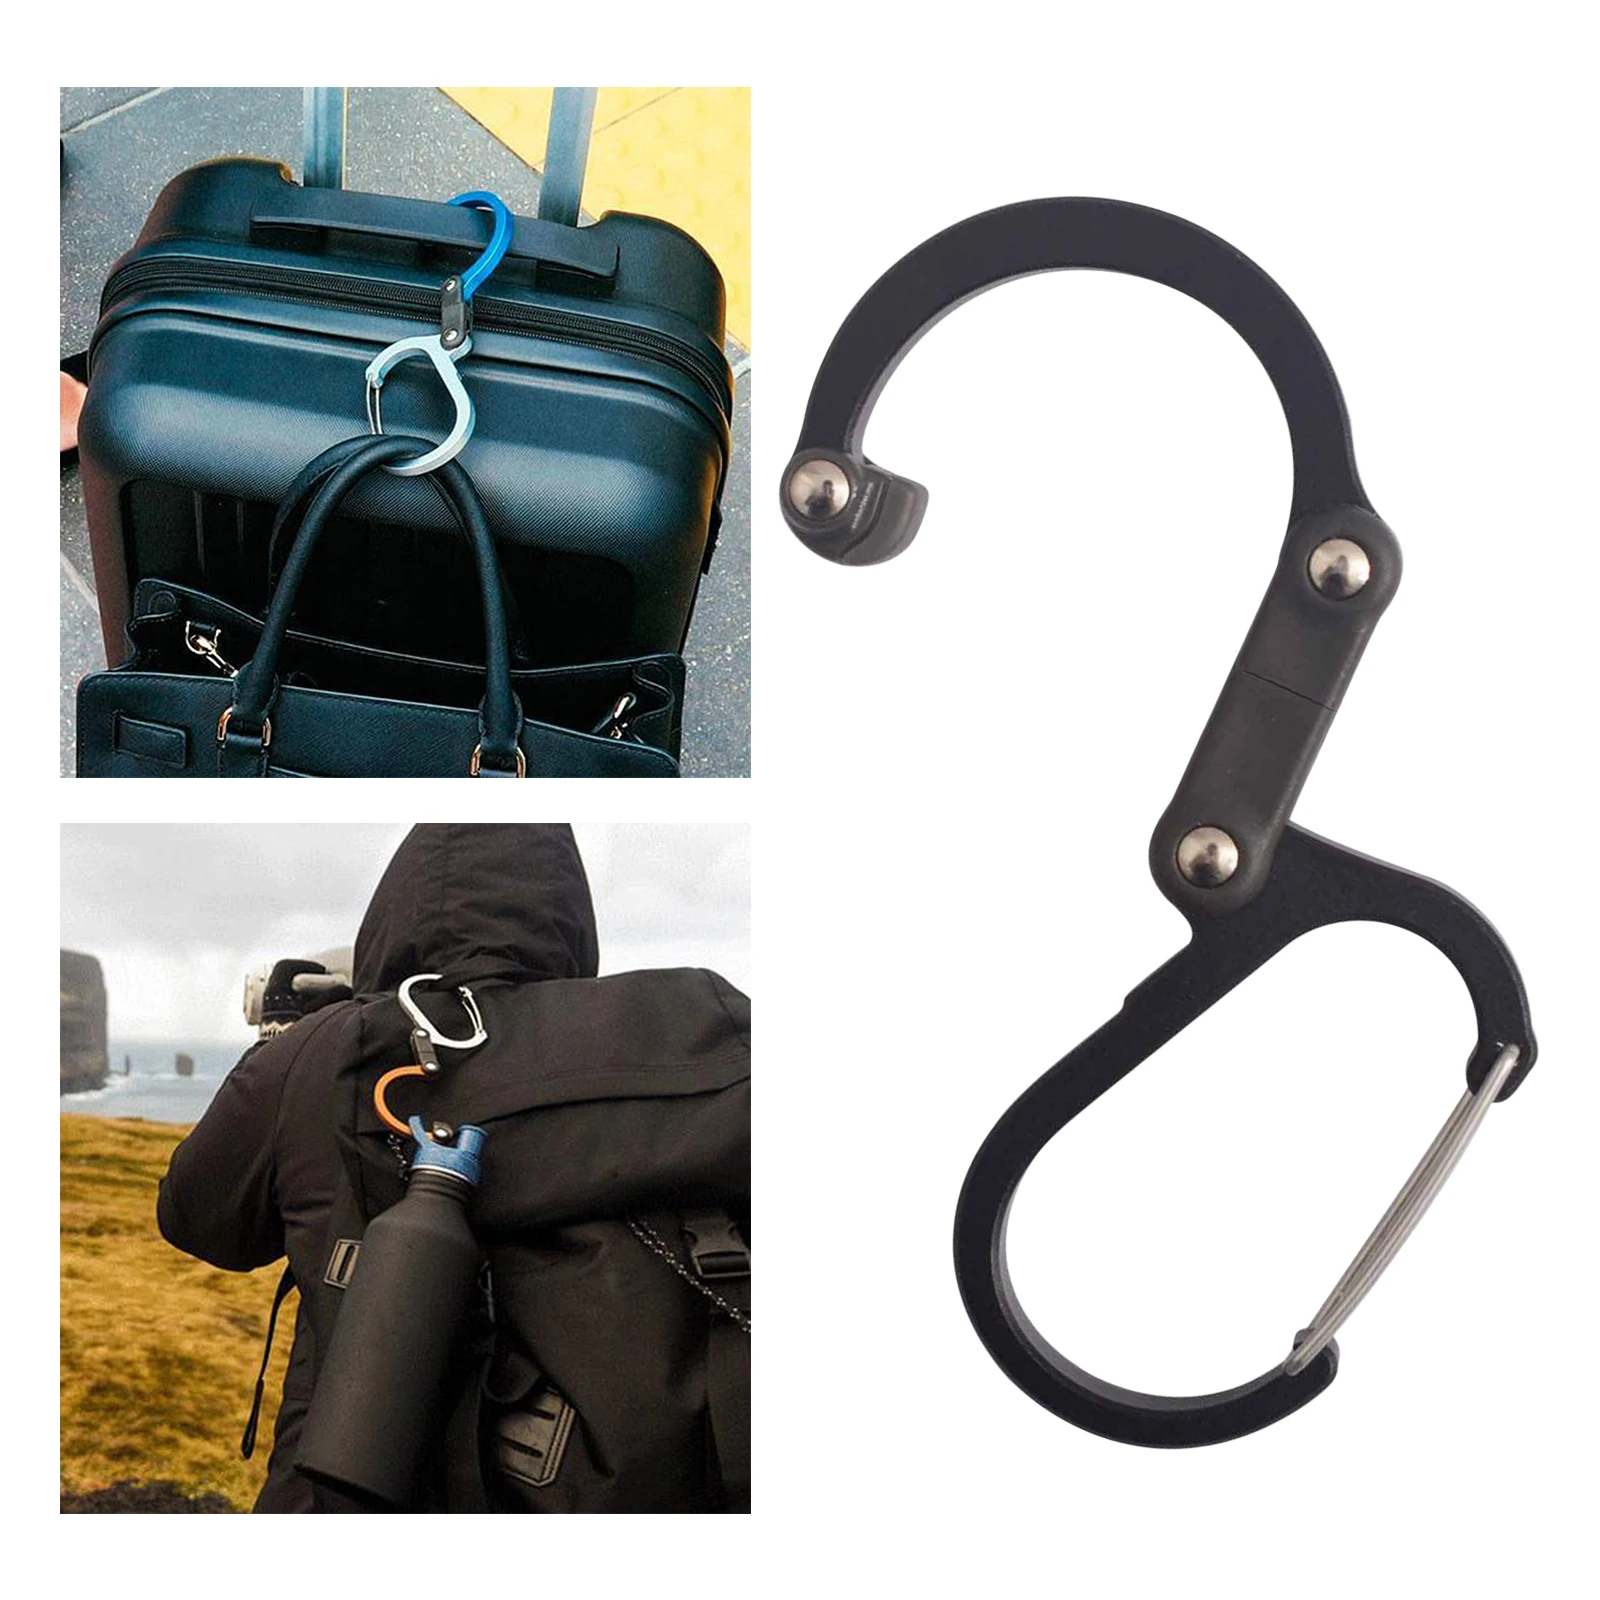 Deluxe Carabiner Clip and Hook for Travel Camping Backpack Handbag Bag